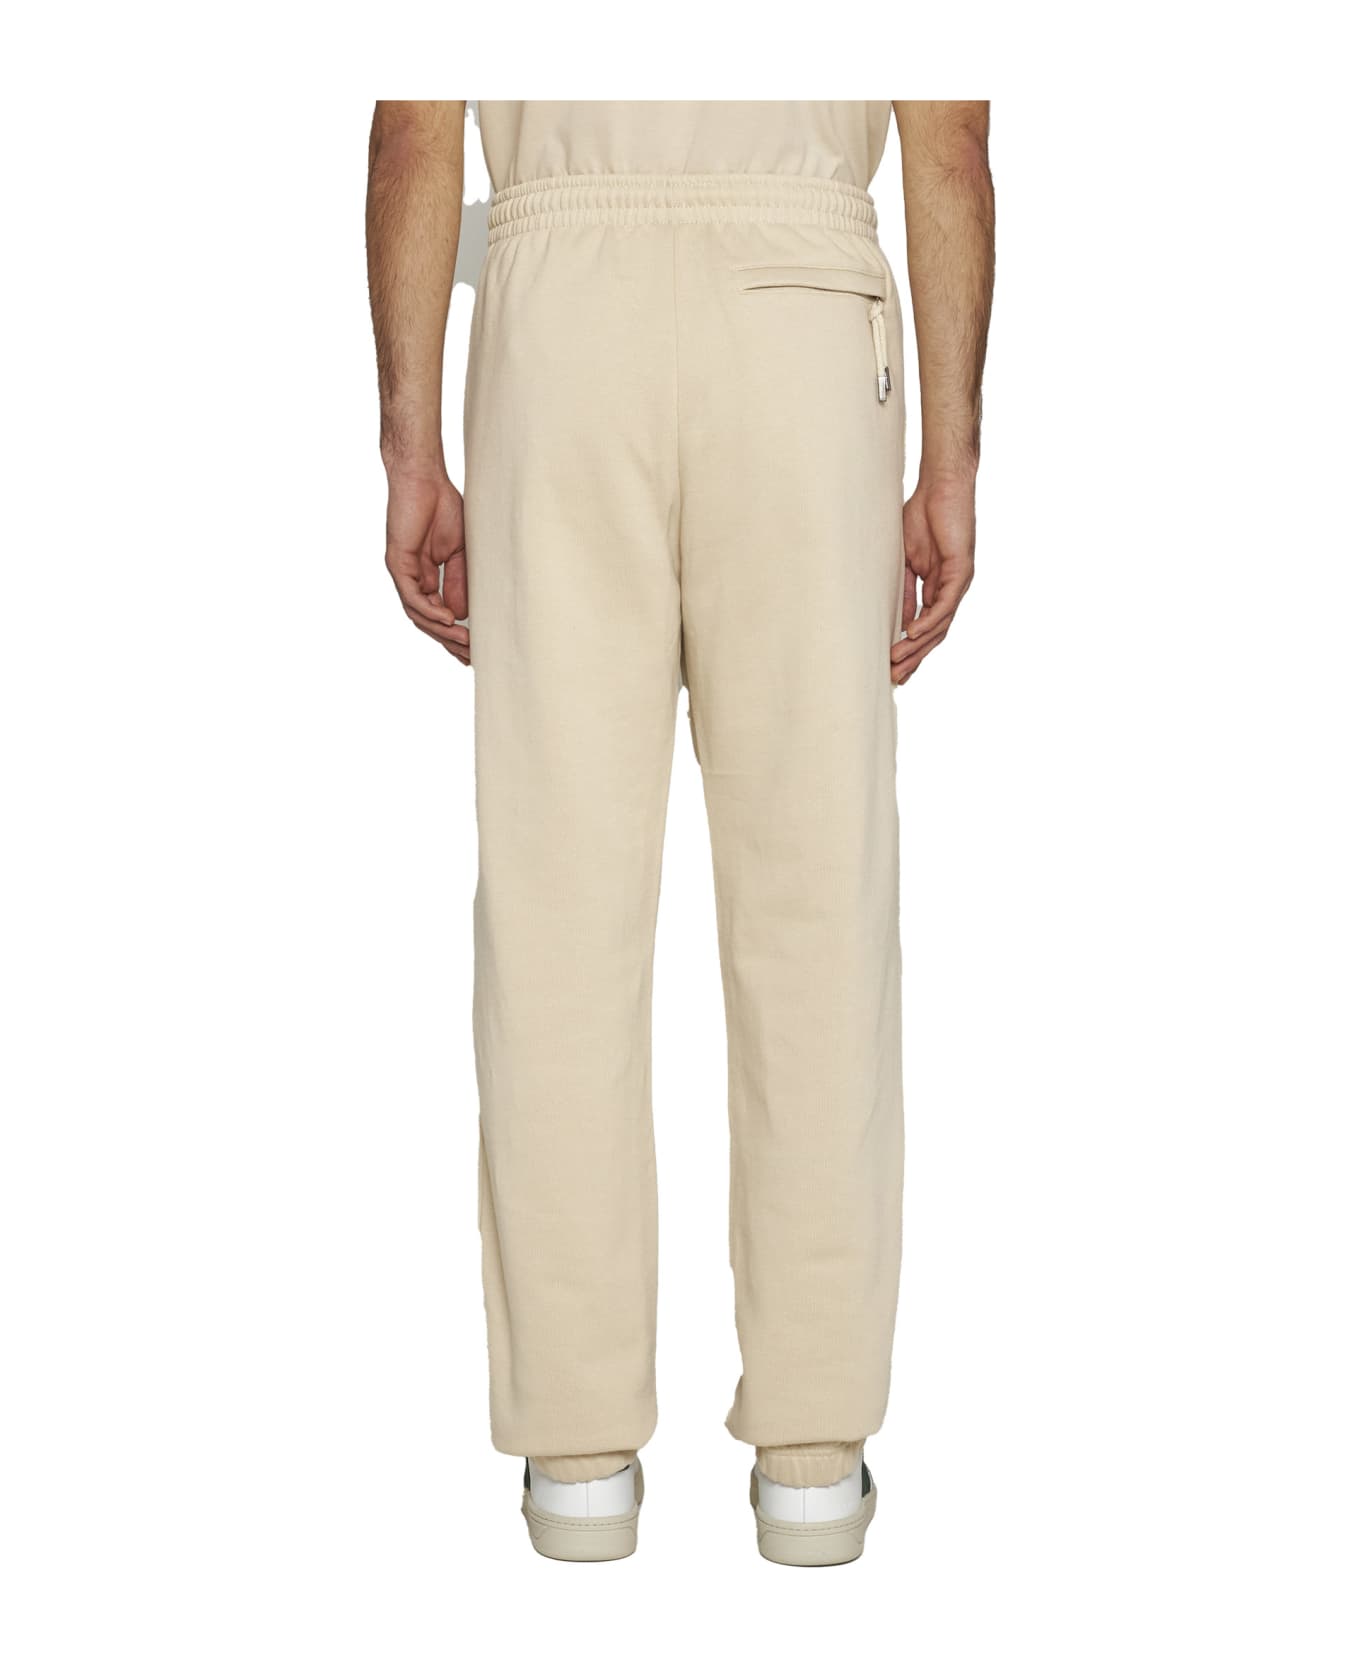 Jacquemus Logo-print Organic Cotton Track Pants - Light beige